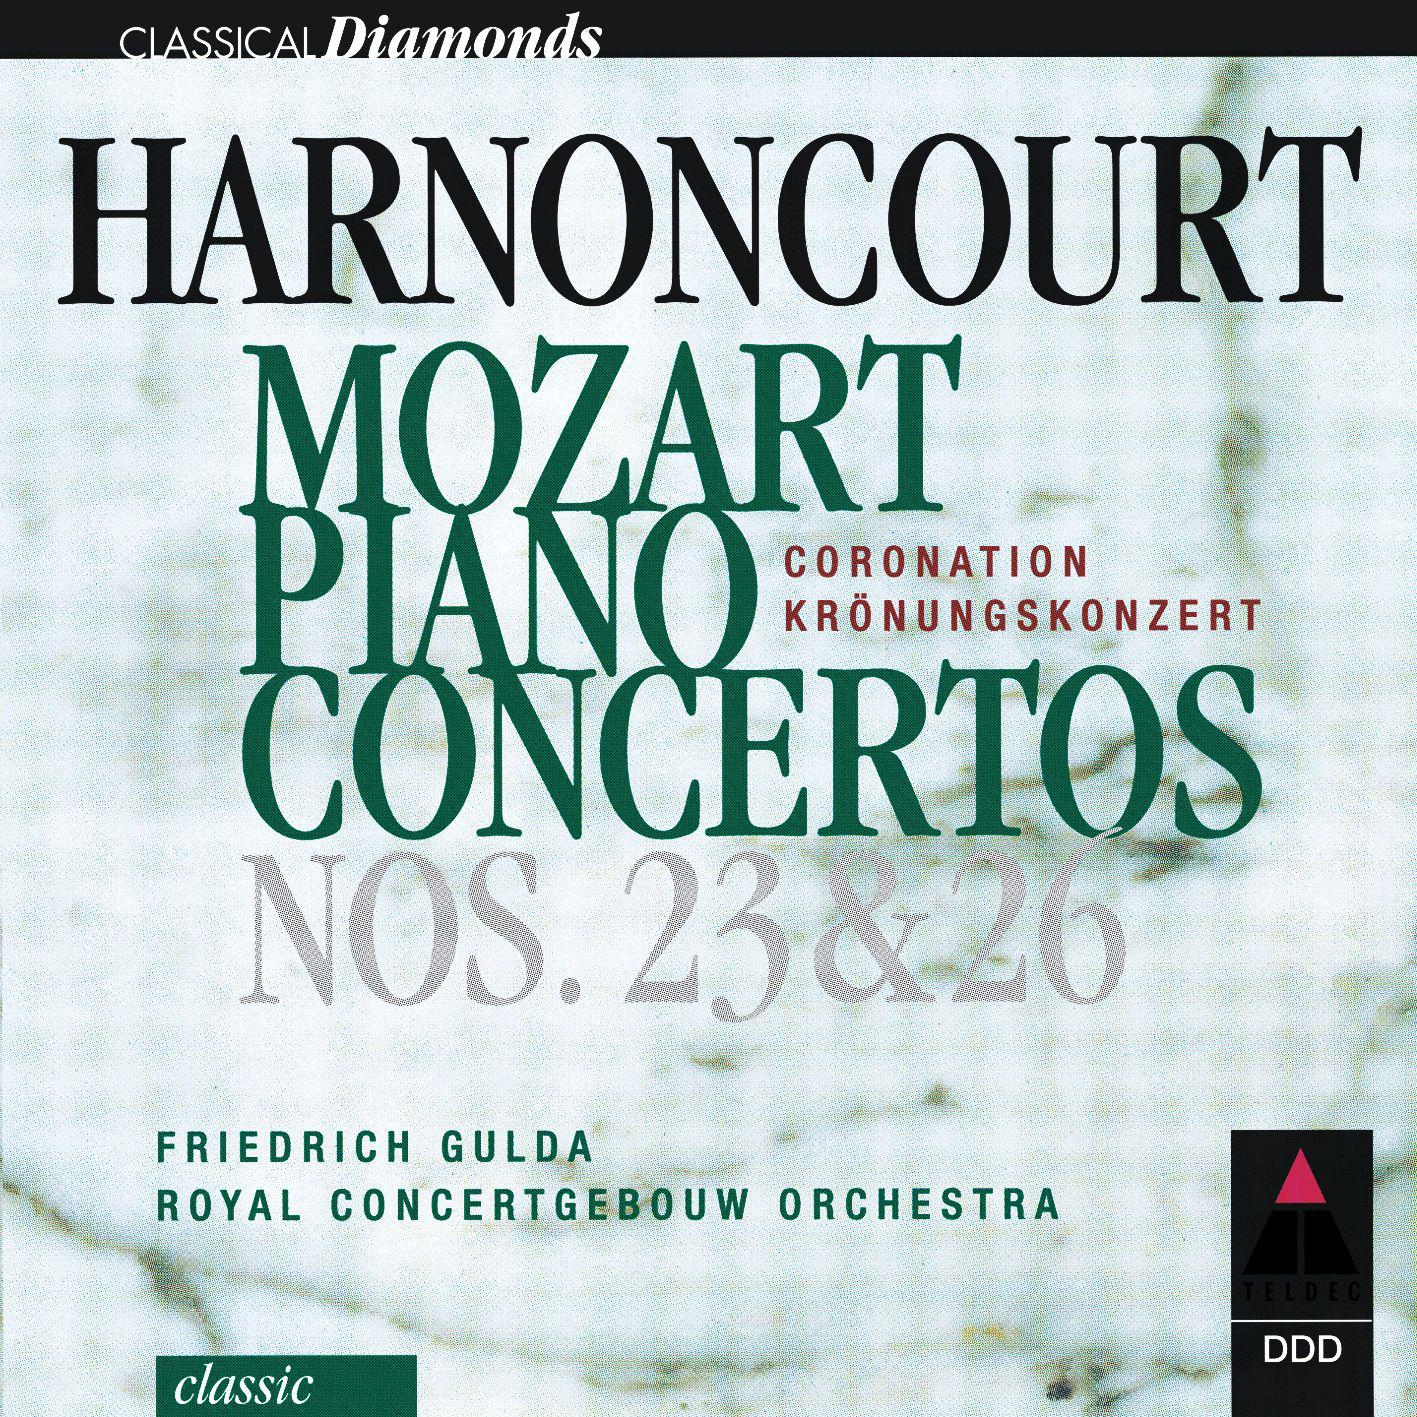 Piano Concerto No. 26 in D Major, K. 537 "Coronation":I. Allegro